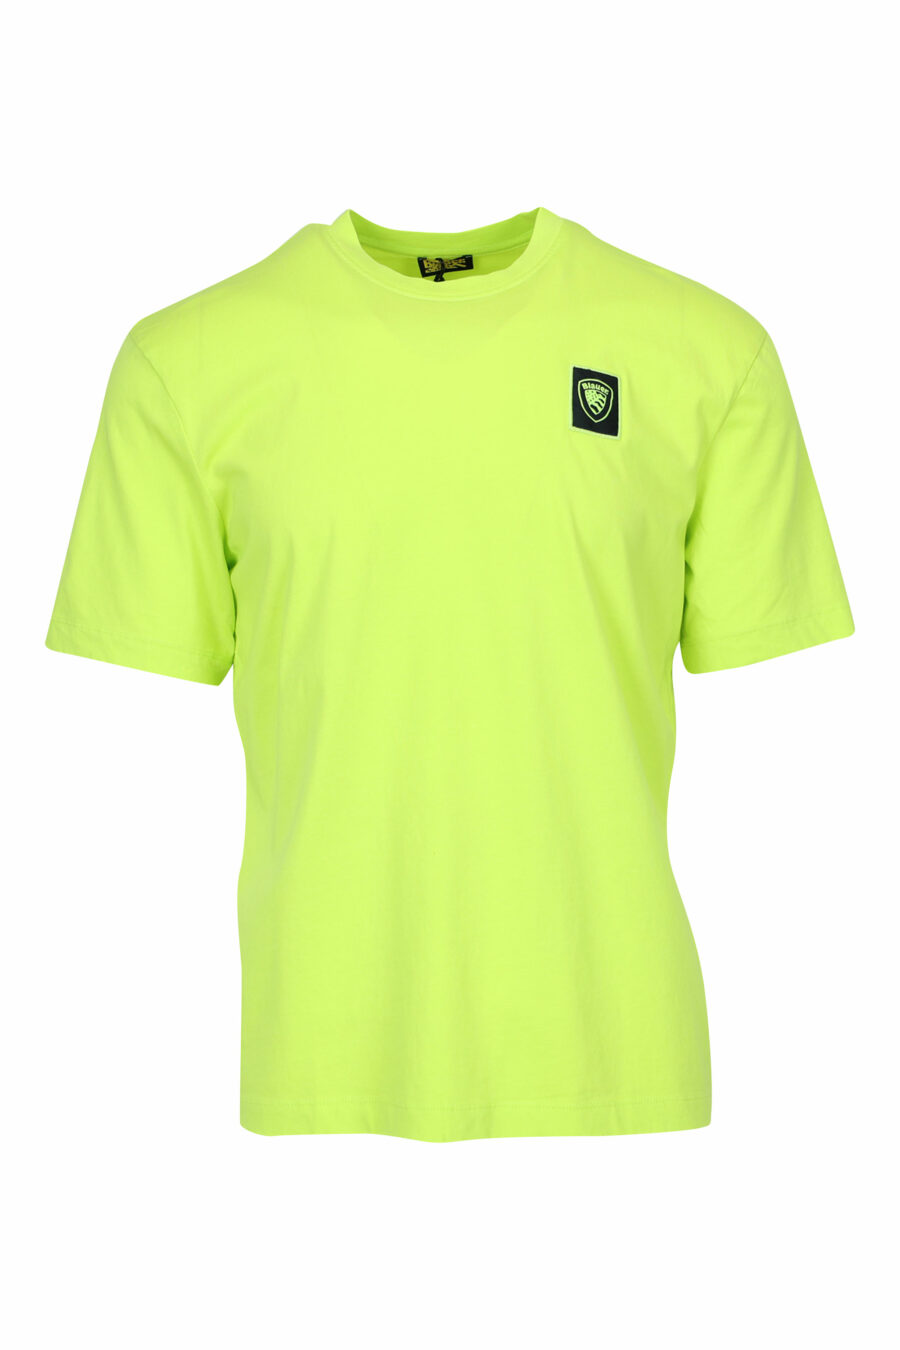 Yellow T-shirt with mini logo - 8058610829339